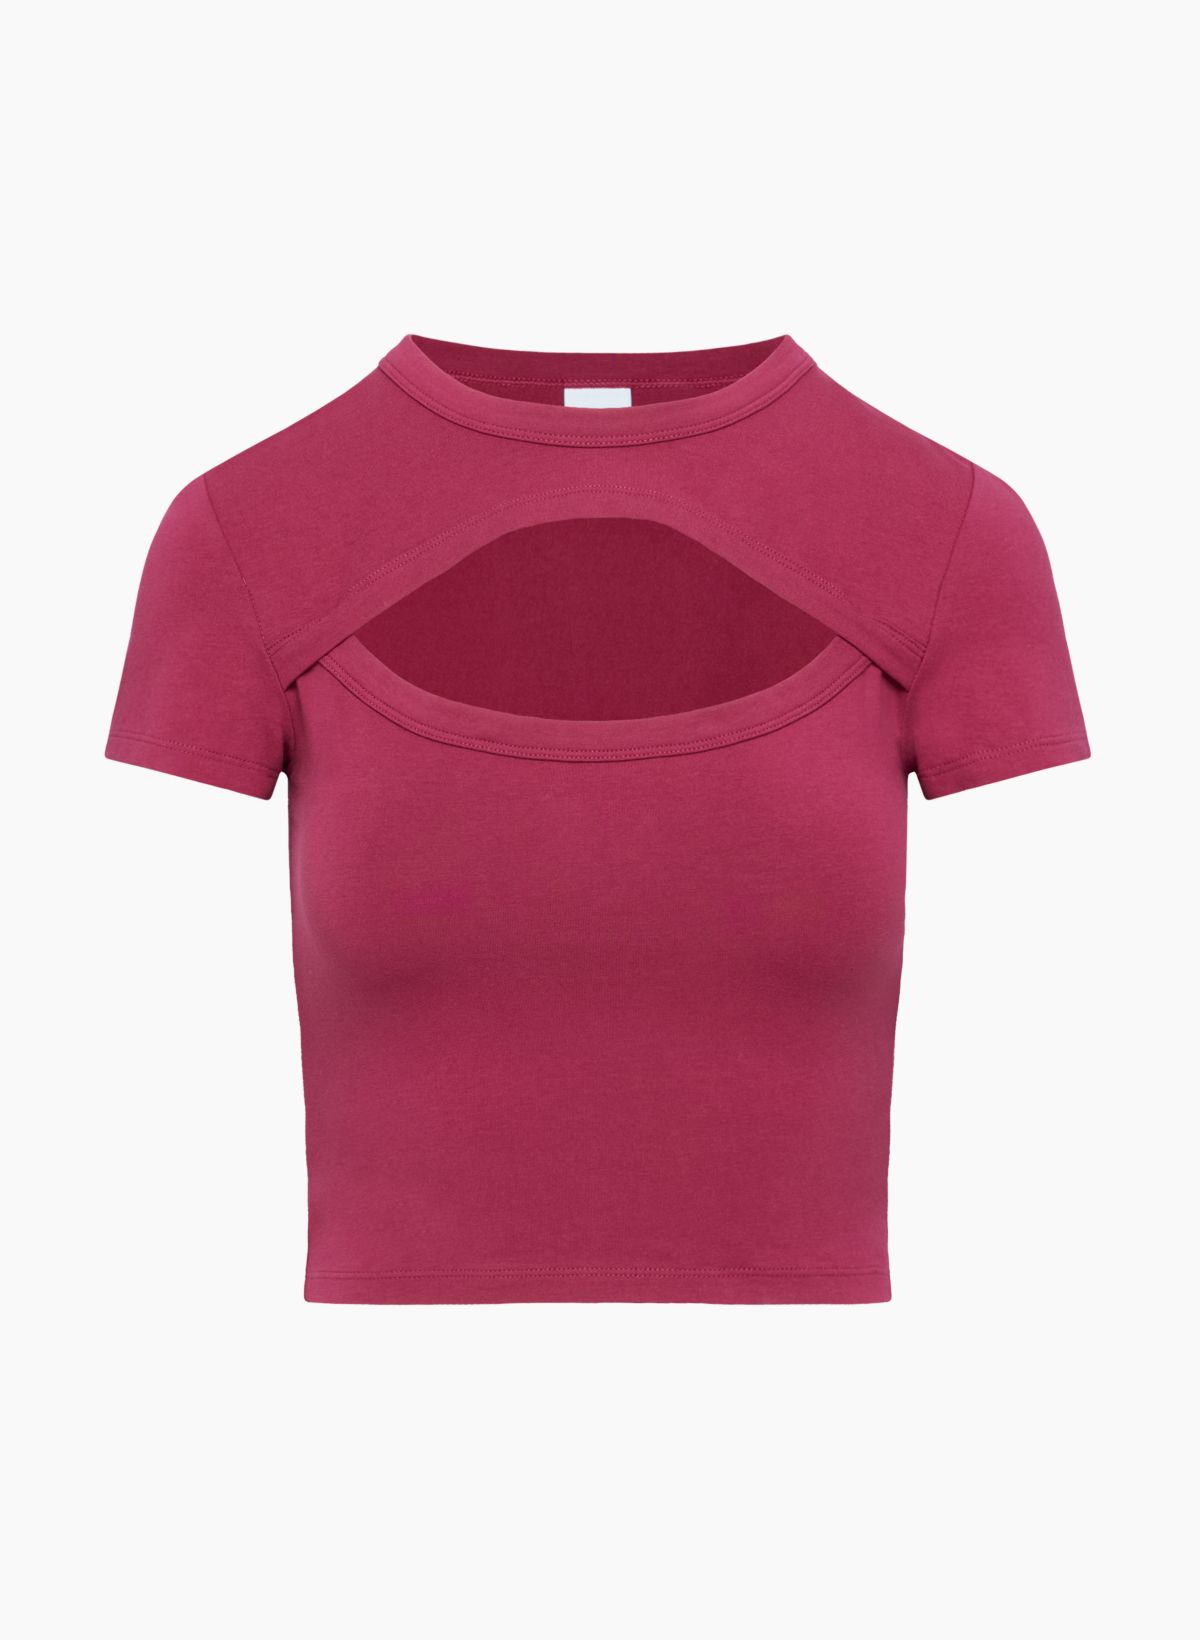 US Womens Short Sleeve Cotton T-Shirt Half Chest Crop Top Sexy